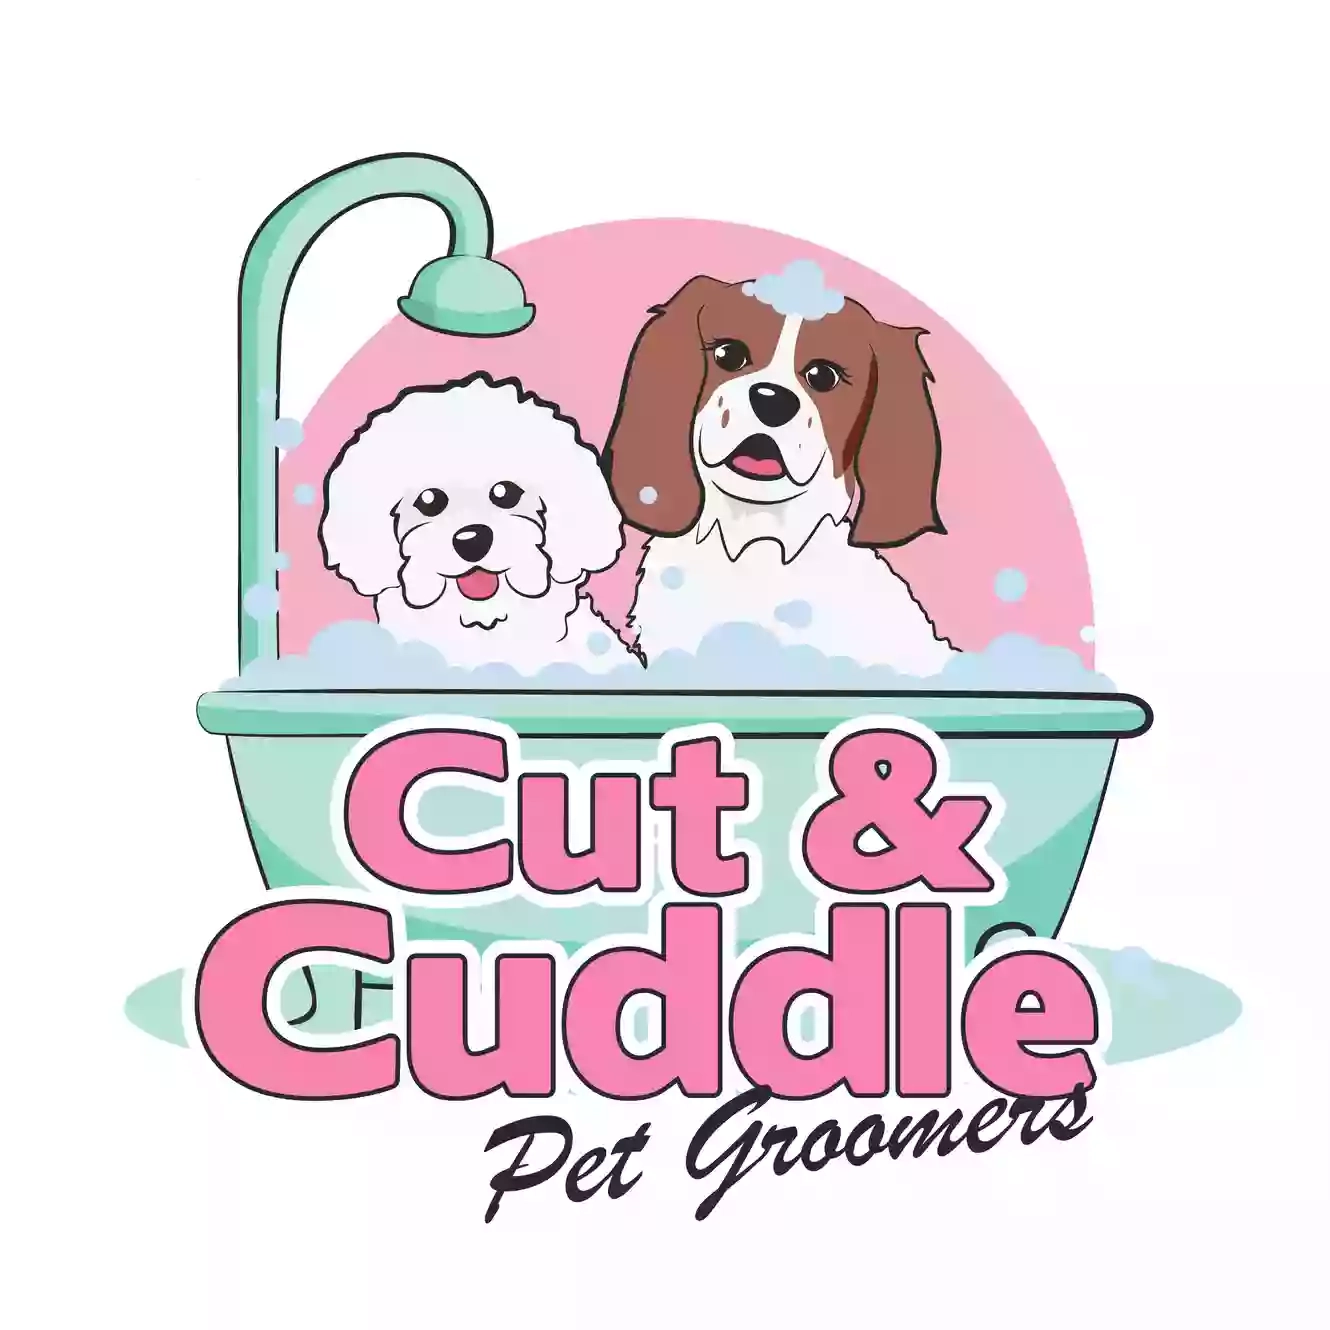 Cut & Cuddle Pet Groomers